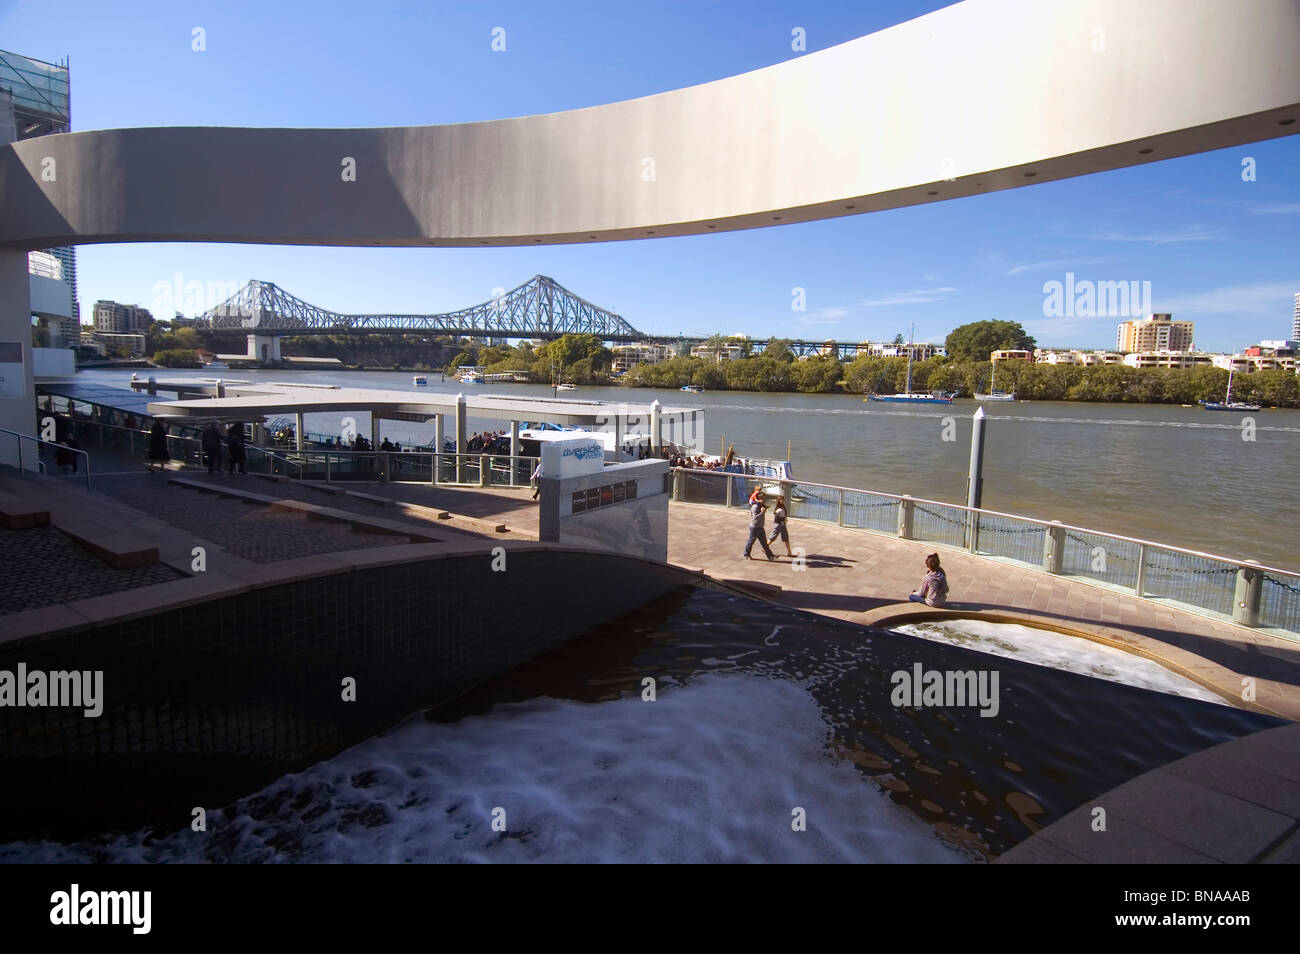 Riverside Center e piani di ponte, Brisbane, Queensland, Australia. N. PR o MR Foto Stock